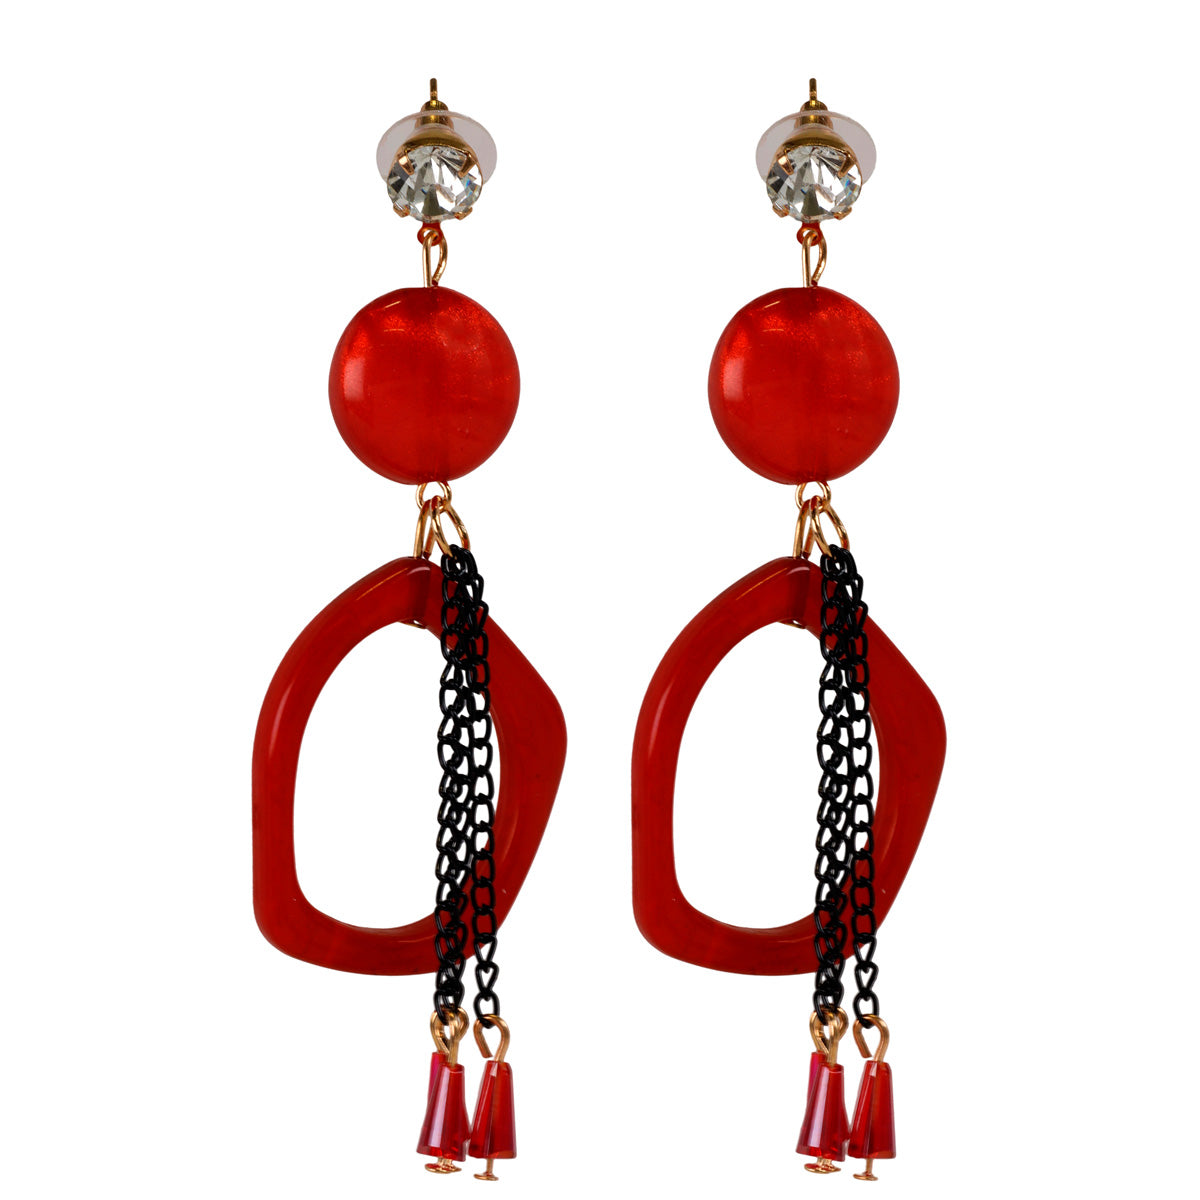 Chain hanging earrings